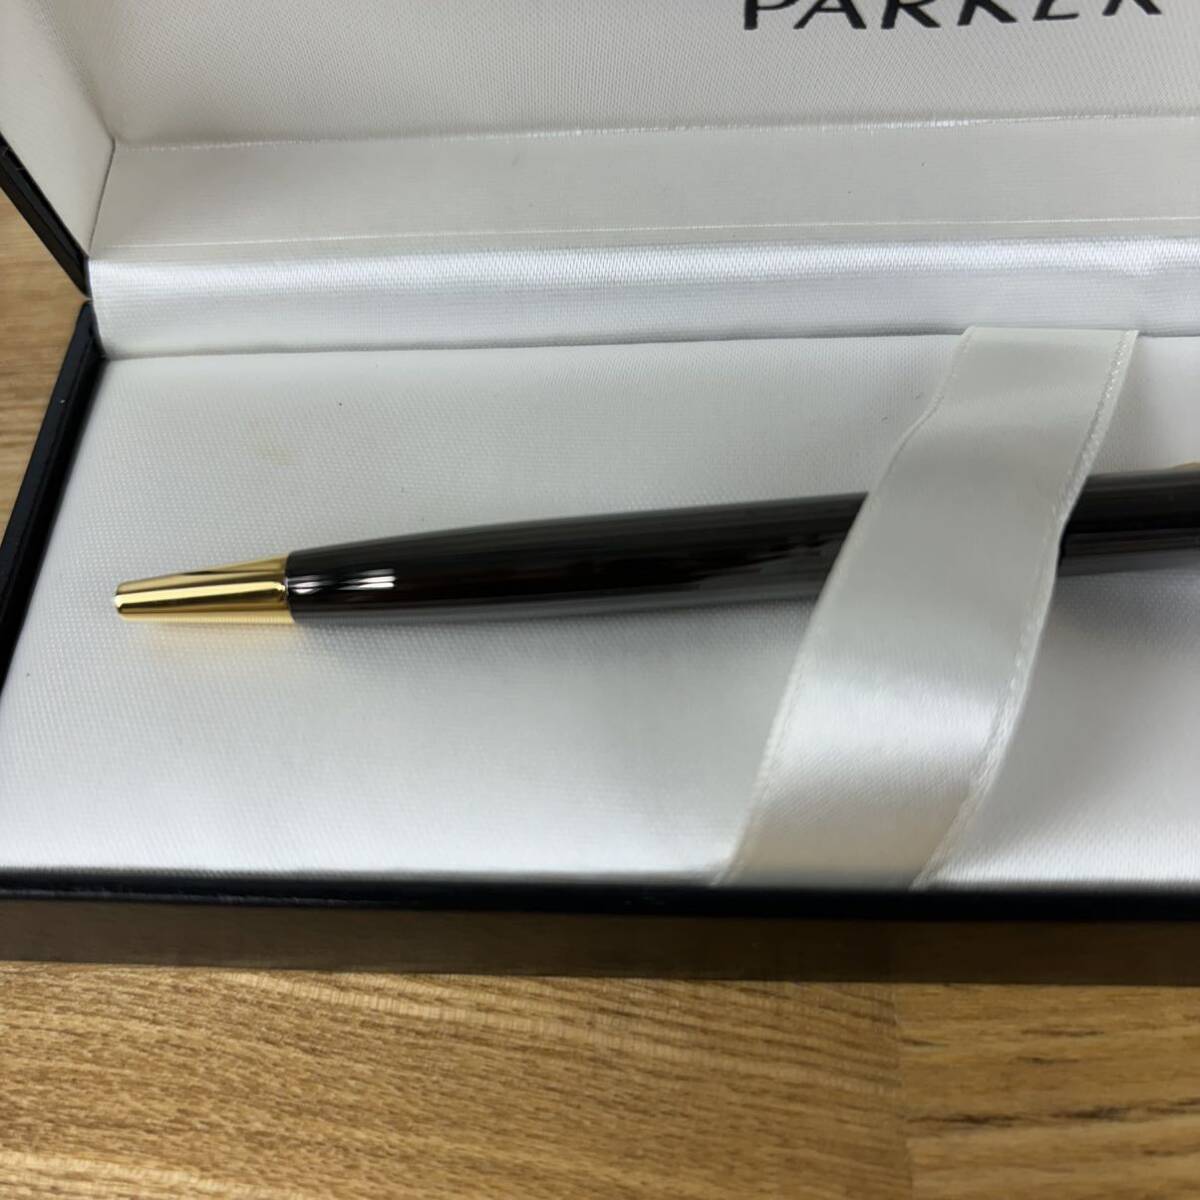 ec532 ボールペン PARKER 筆記用具 ブラック 筆記用具 箱入りスリムタイプ 文具 お洒落 大人 パーカー _画像3